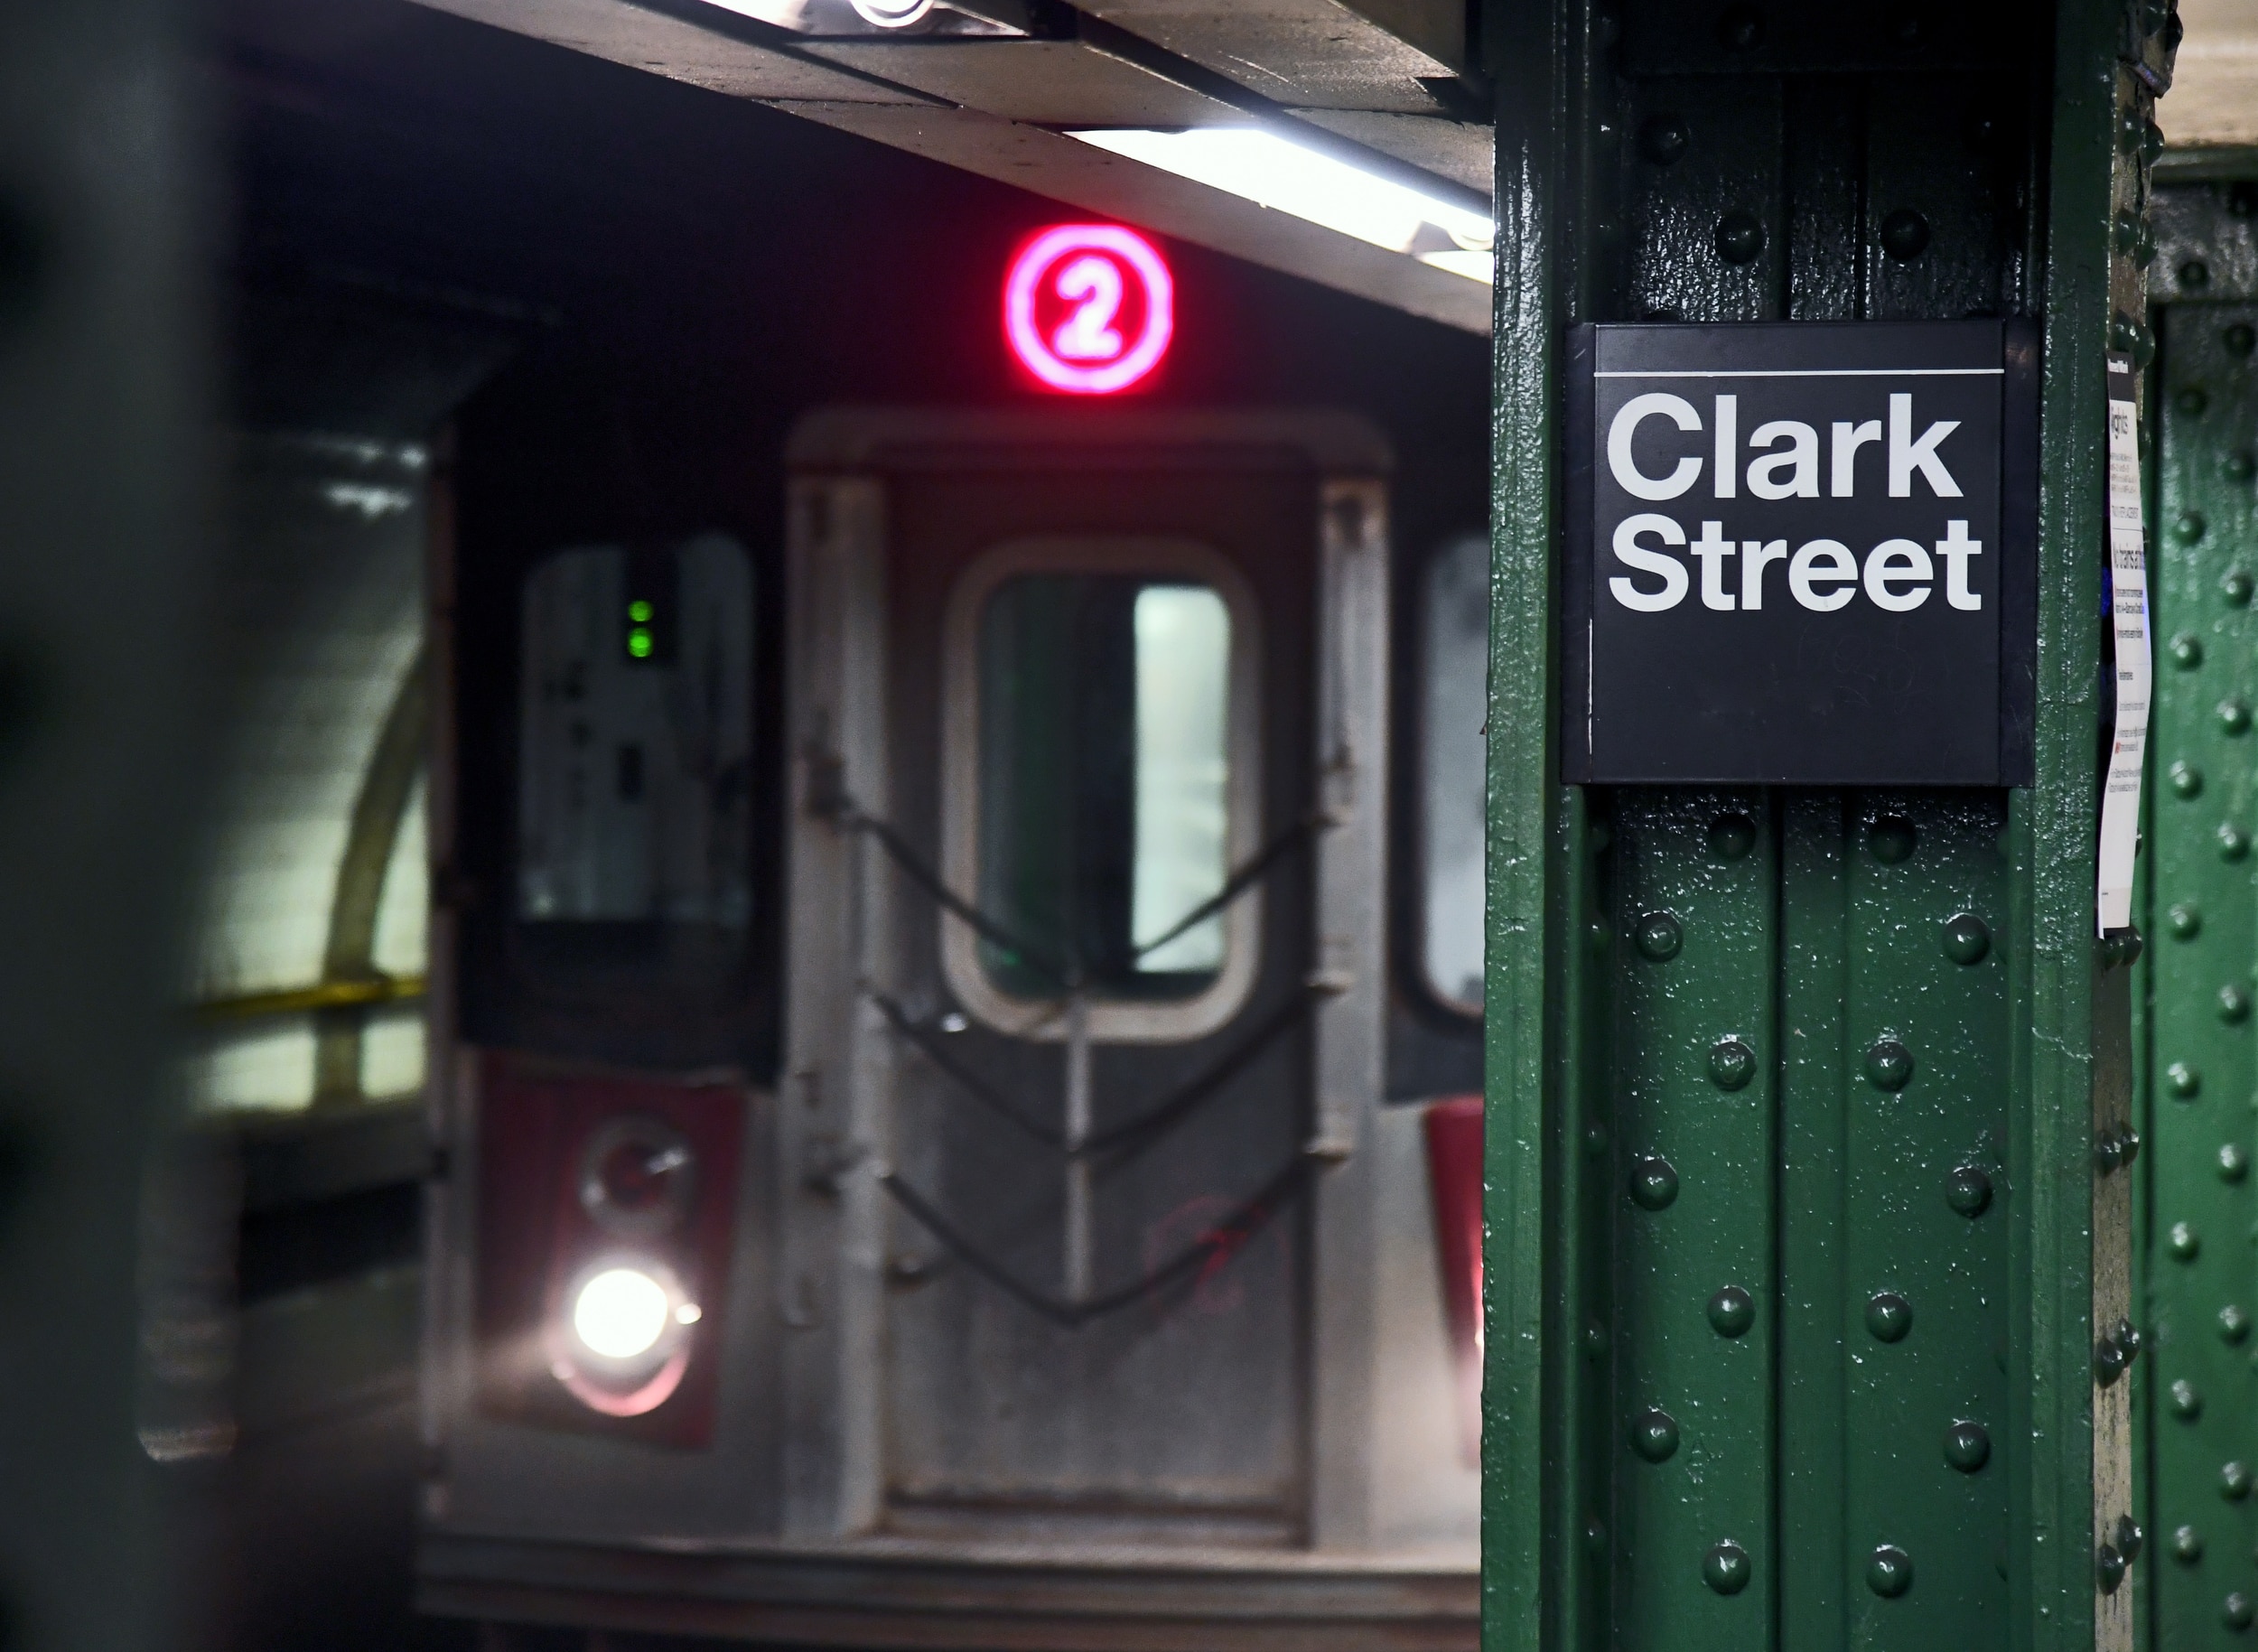 2 Train enters Clark Street Station